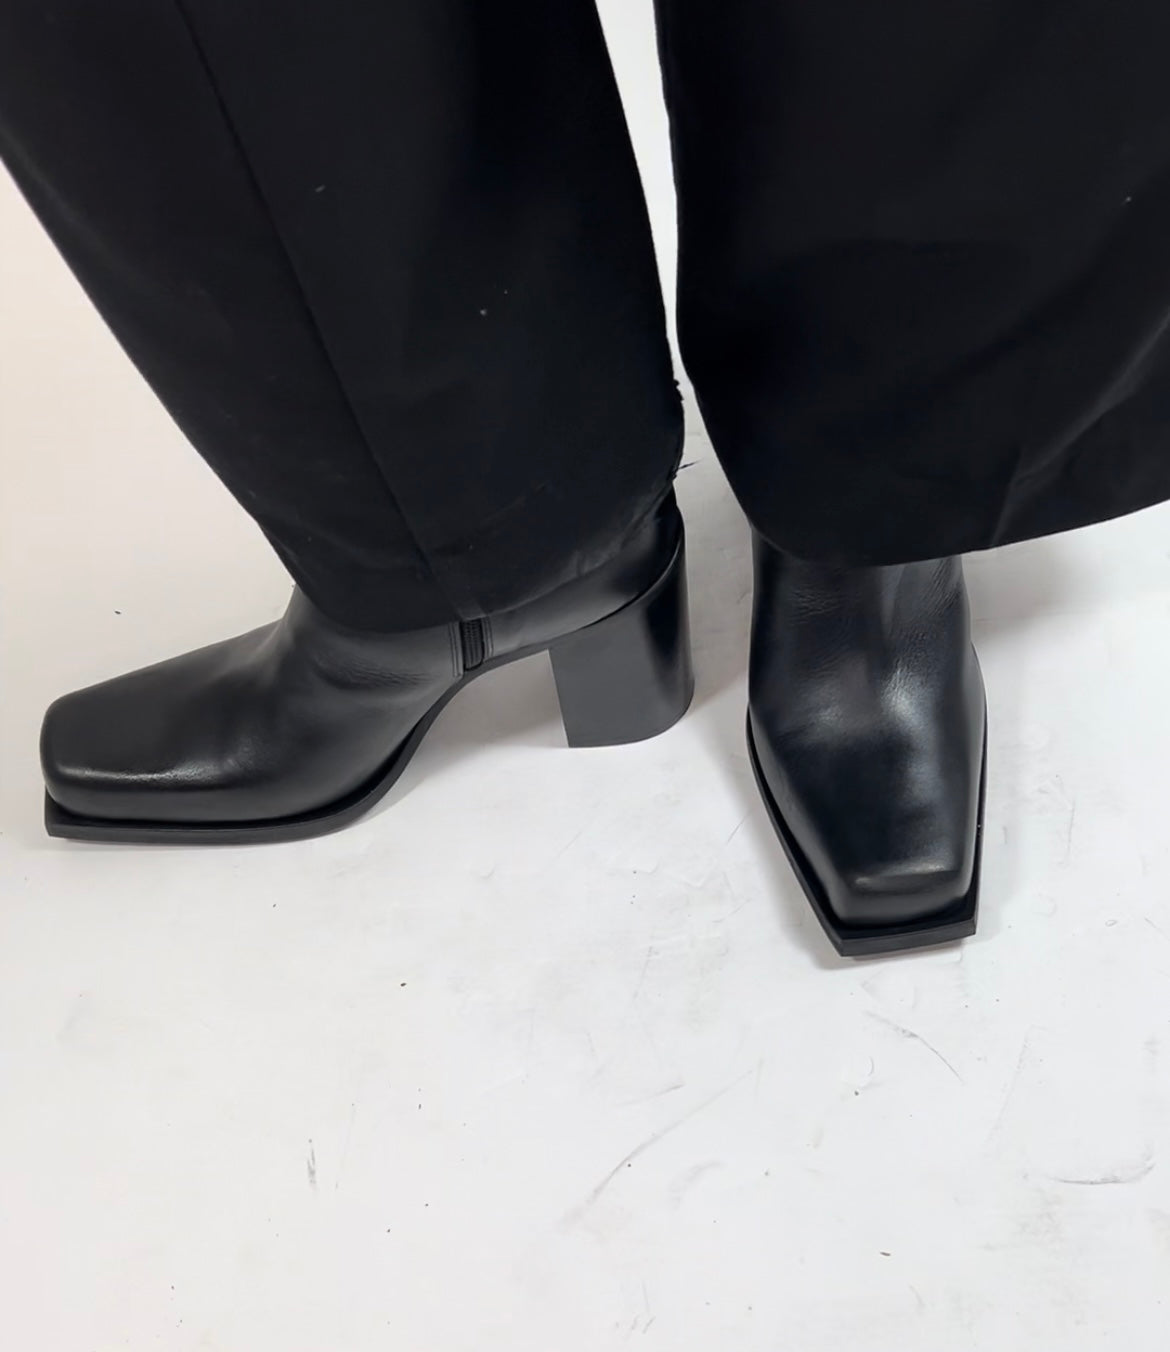 Dawson boots, black leather